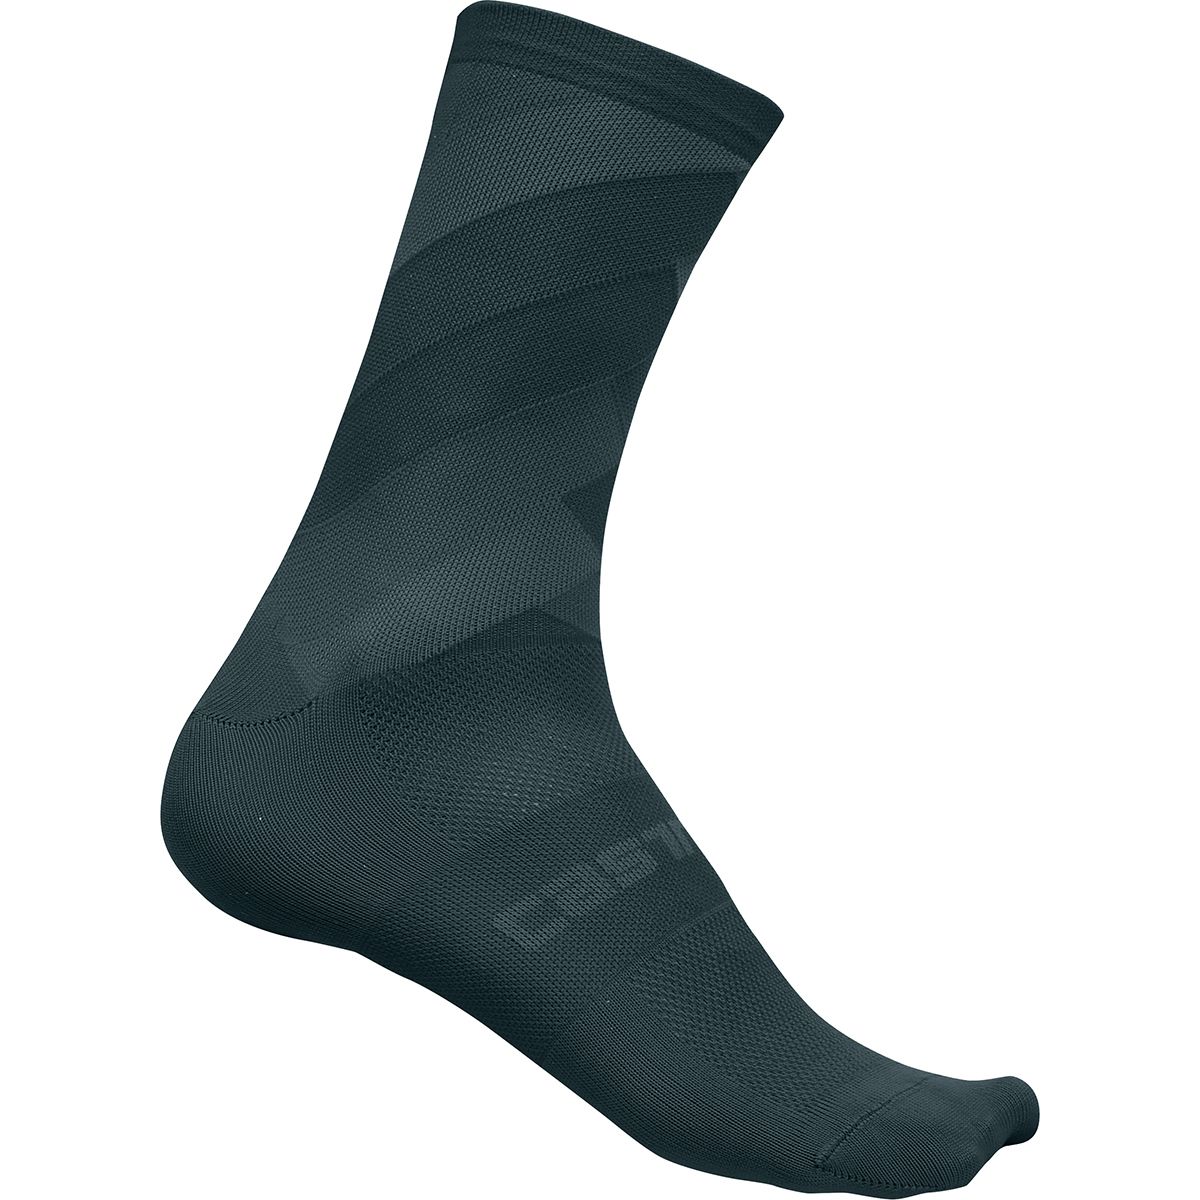 Castelli Free Kit 13 Sock - Men's